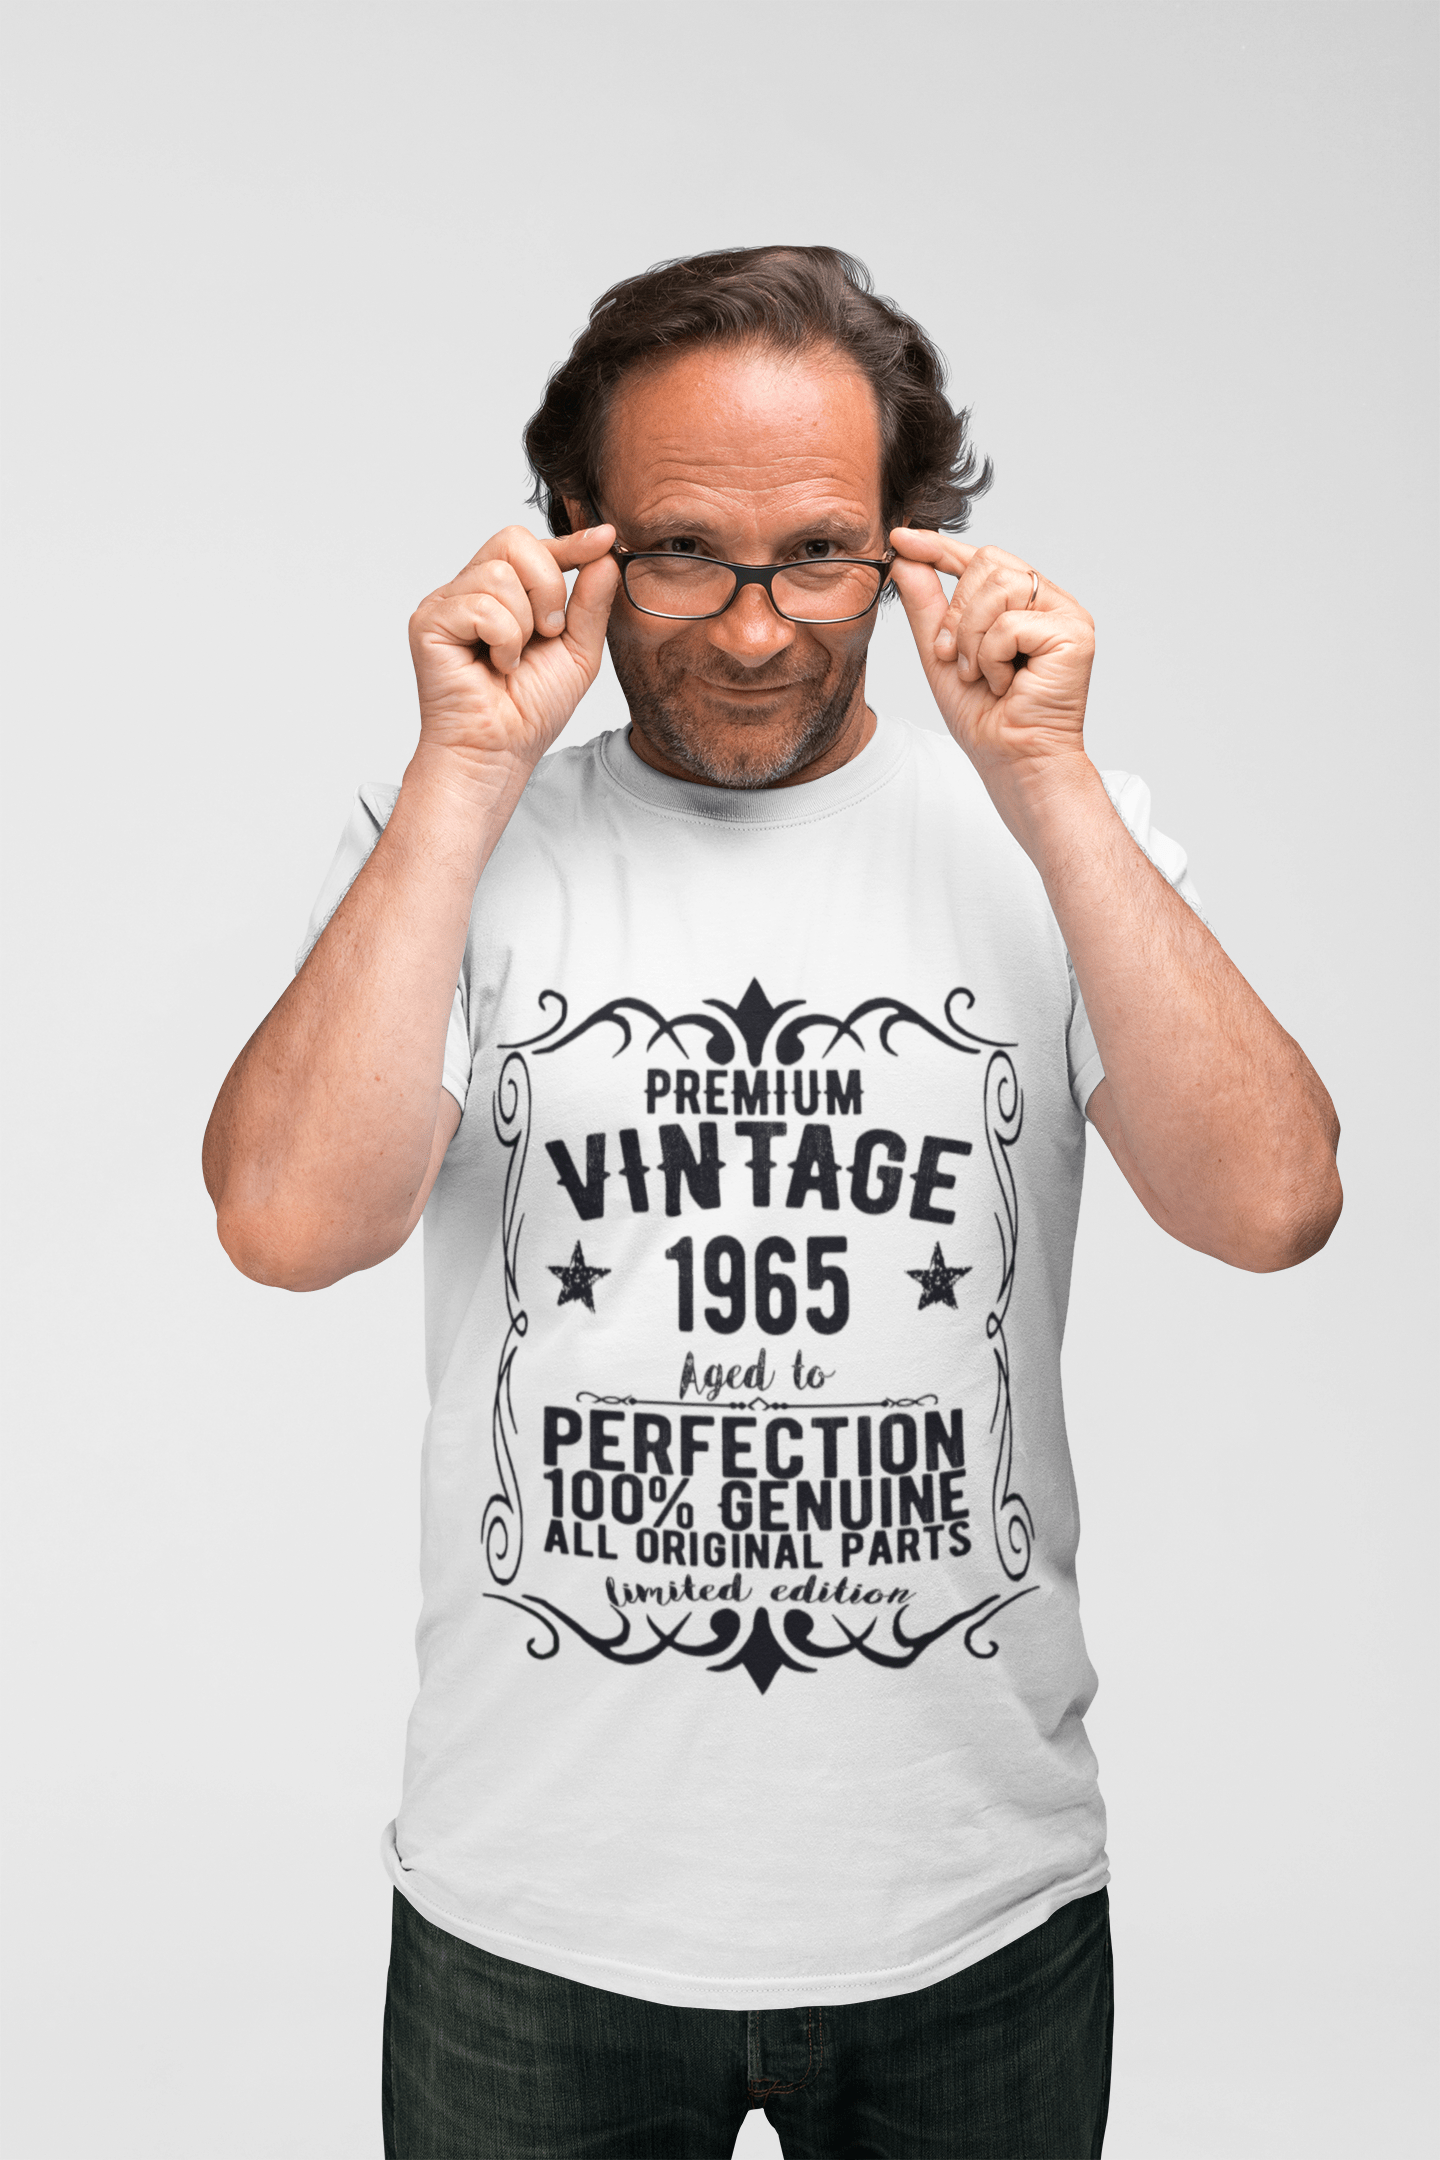 Premium Vintage Year 1965, White, Men's Short Sleeve Round Neck T-shirt, gift t-shirt 00349